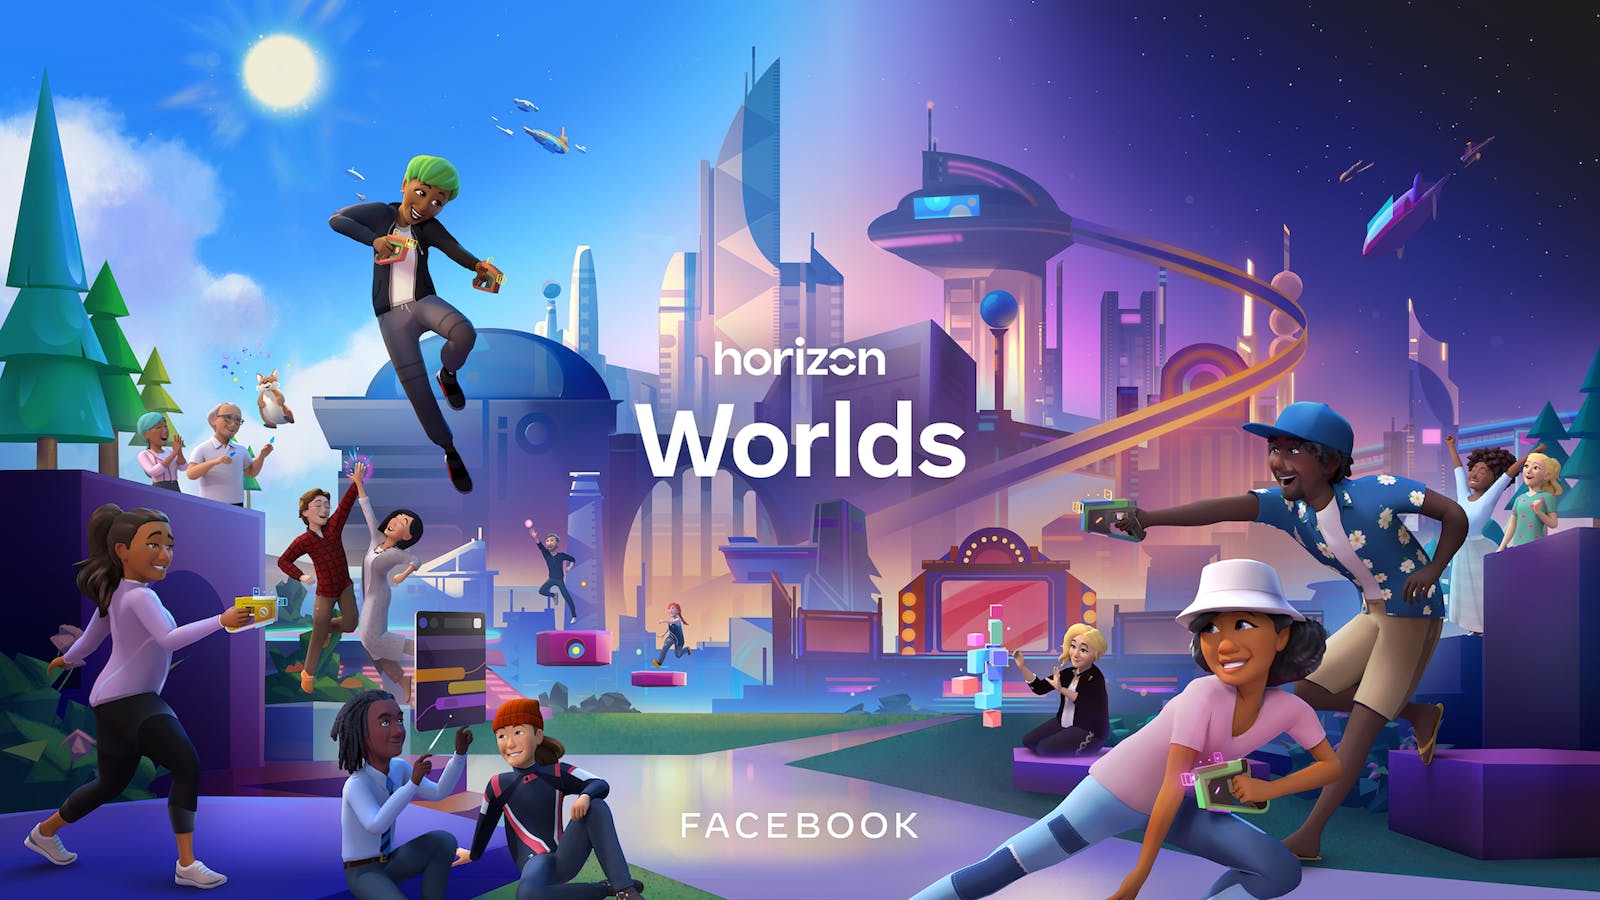 Promotional artwork for Horizon Worlds. Credit: Facebook